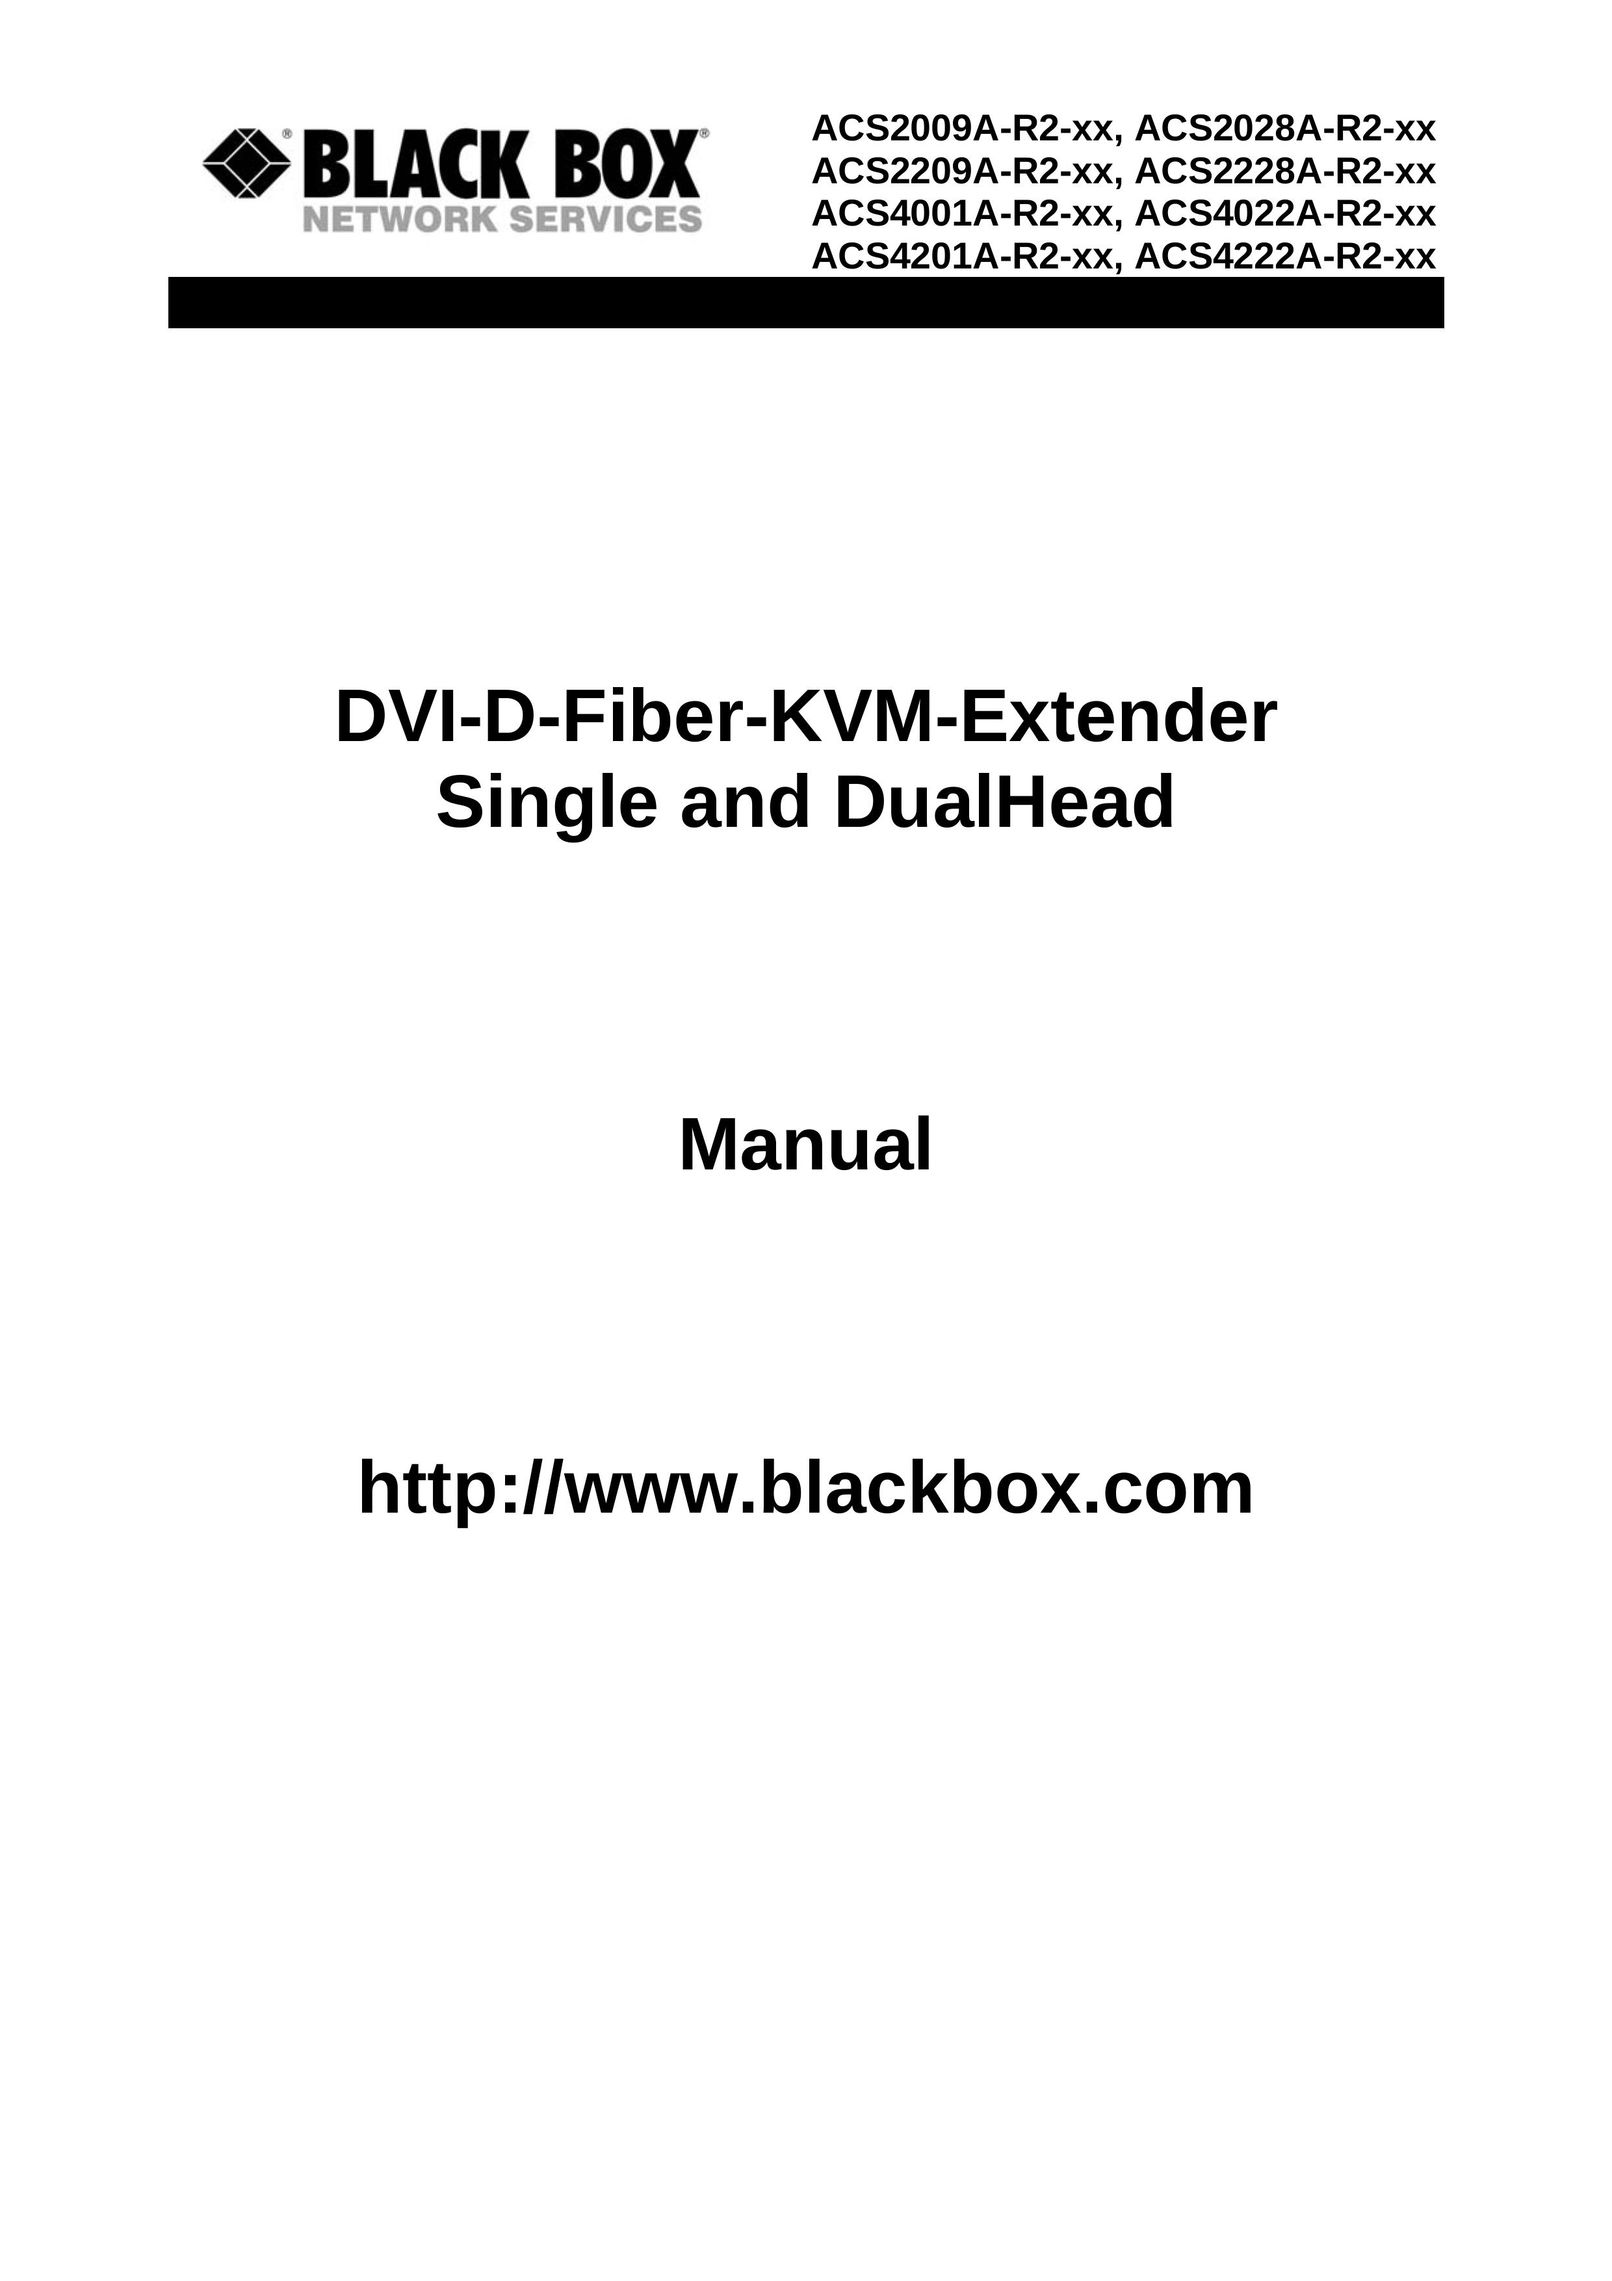 Black Box ACS4022A-R2-xx ACS4201A-R2-xx Network Hardware User Manual